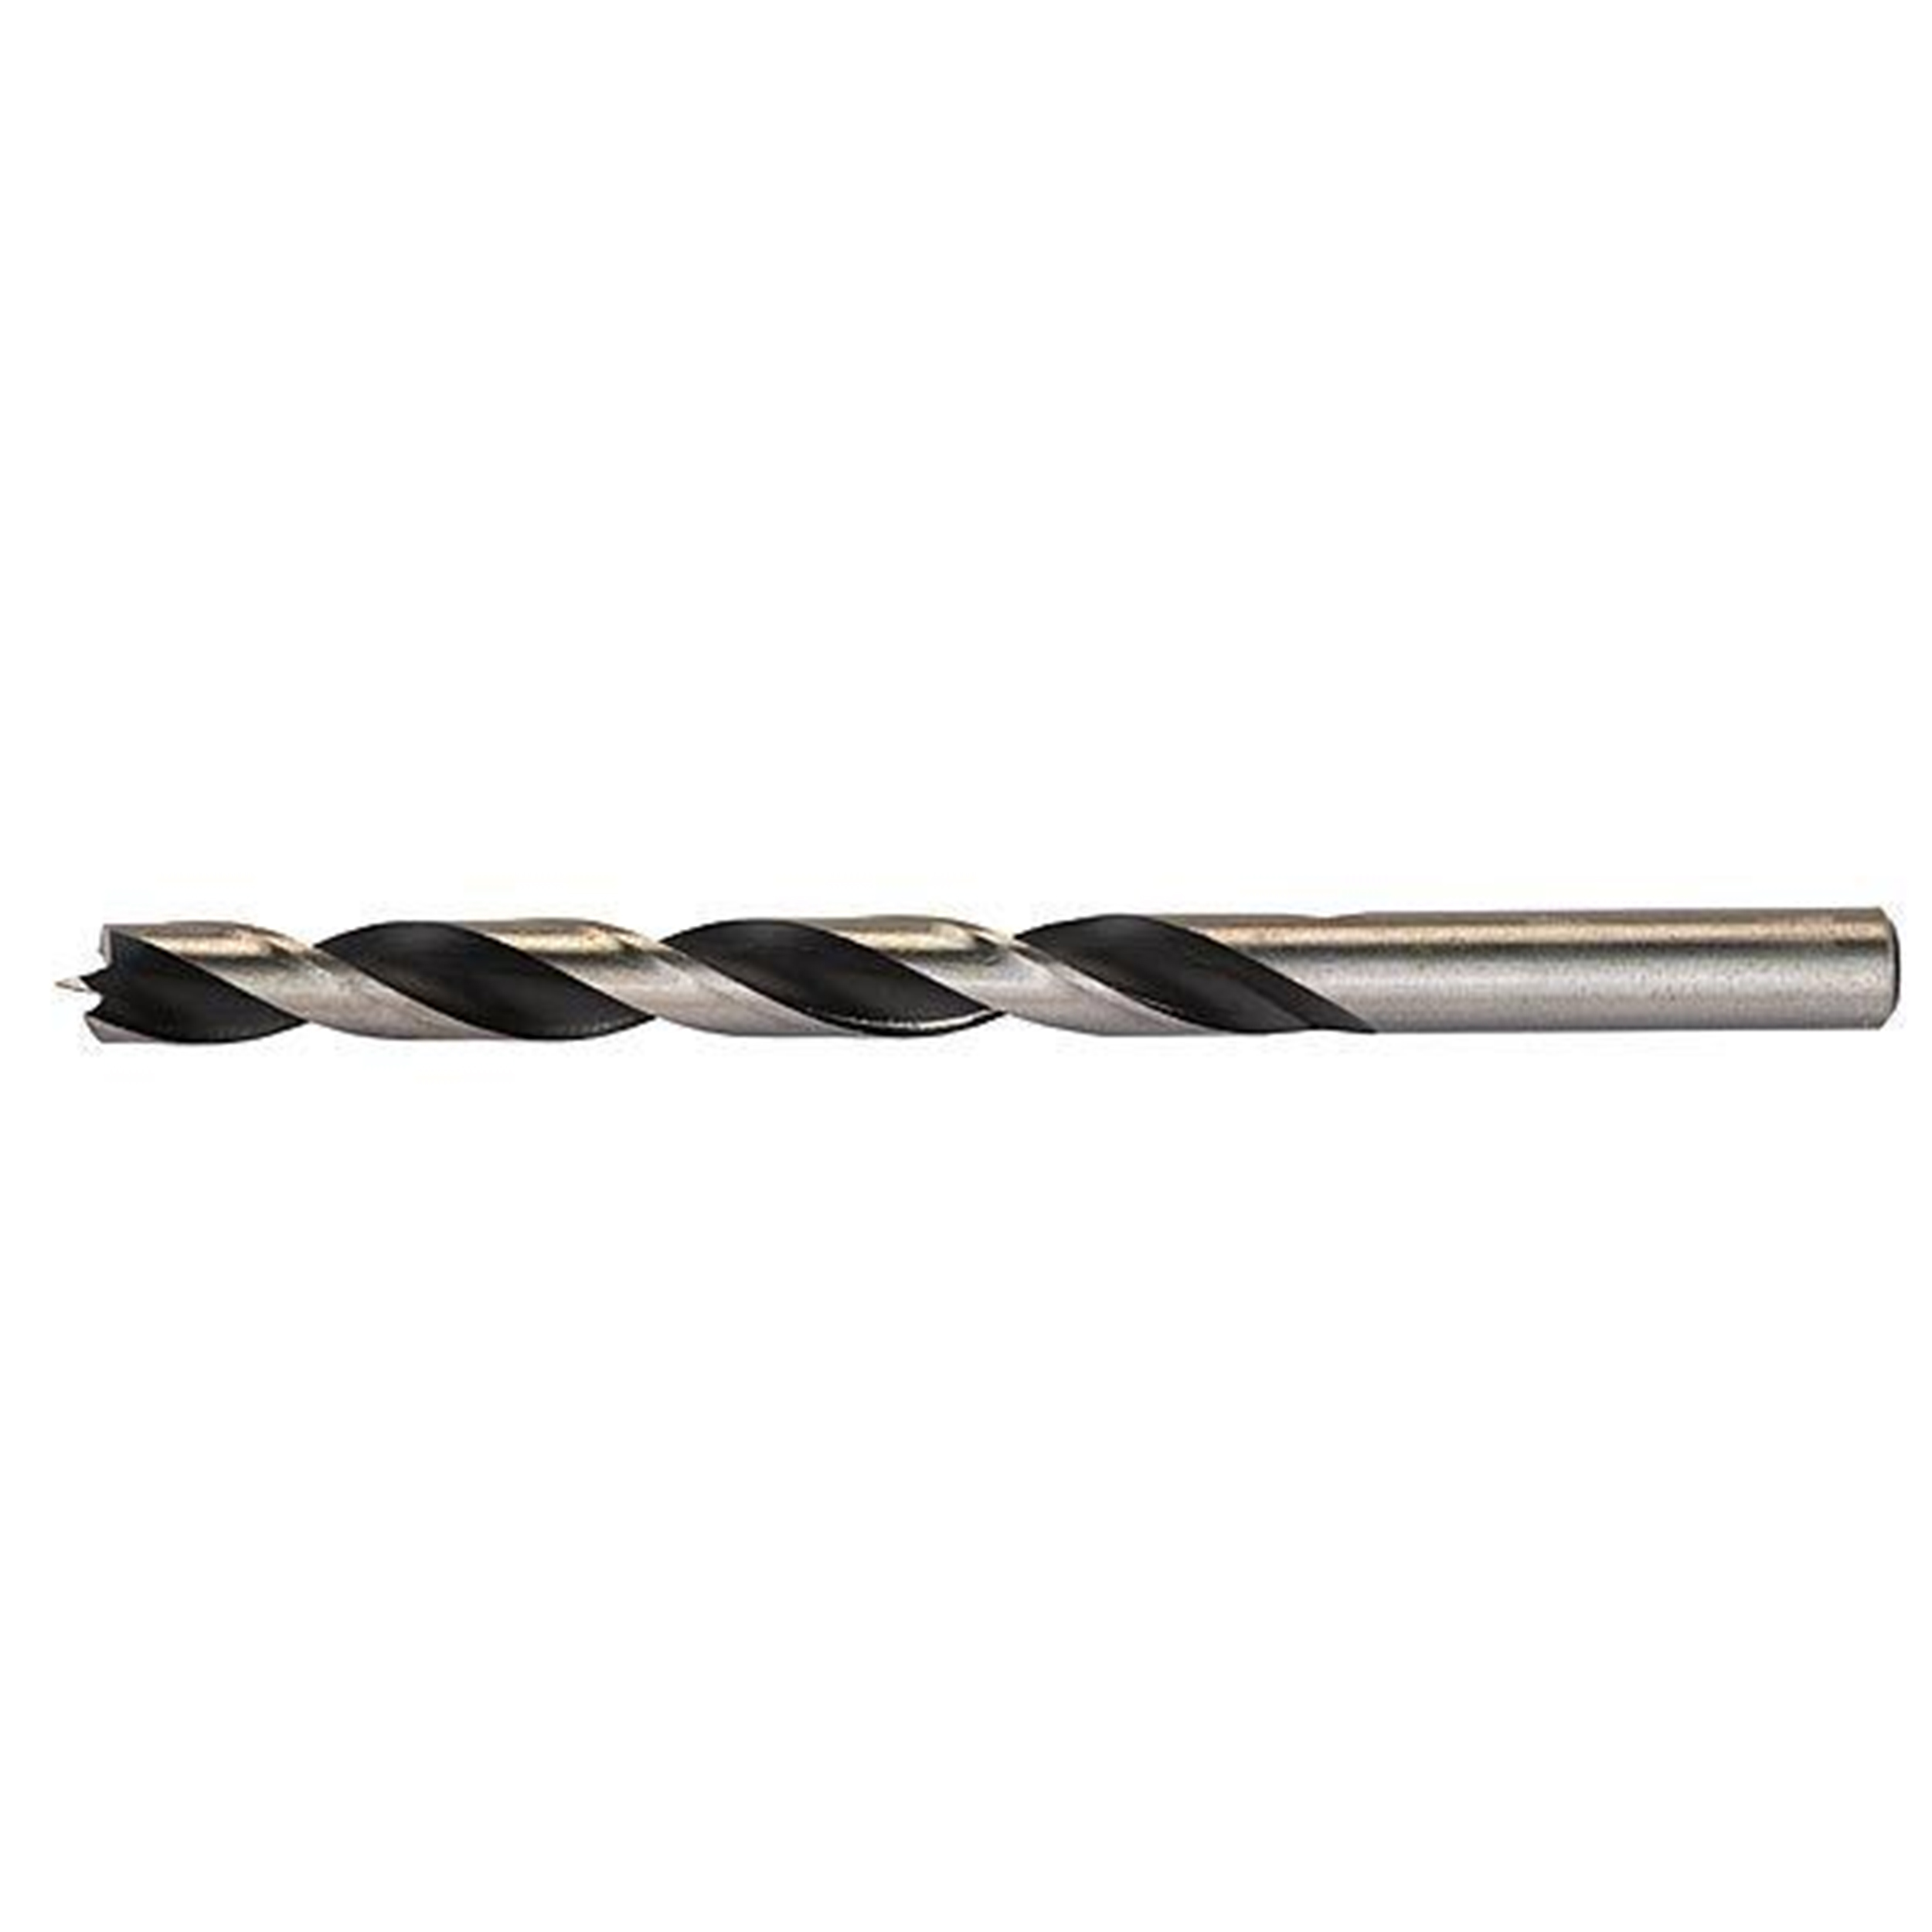 5/16-inch Chrome-vanadium Steel Brad Point Drill Bit